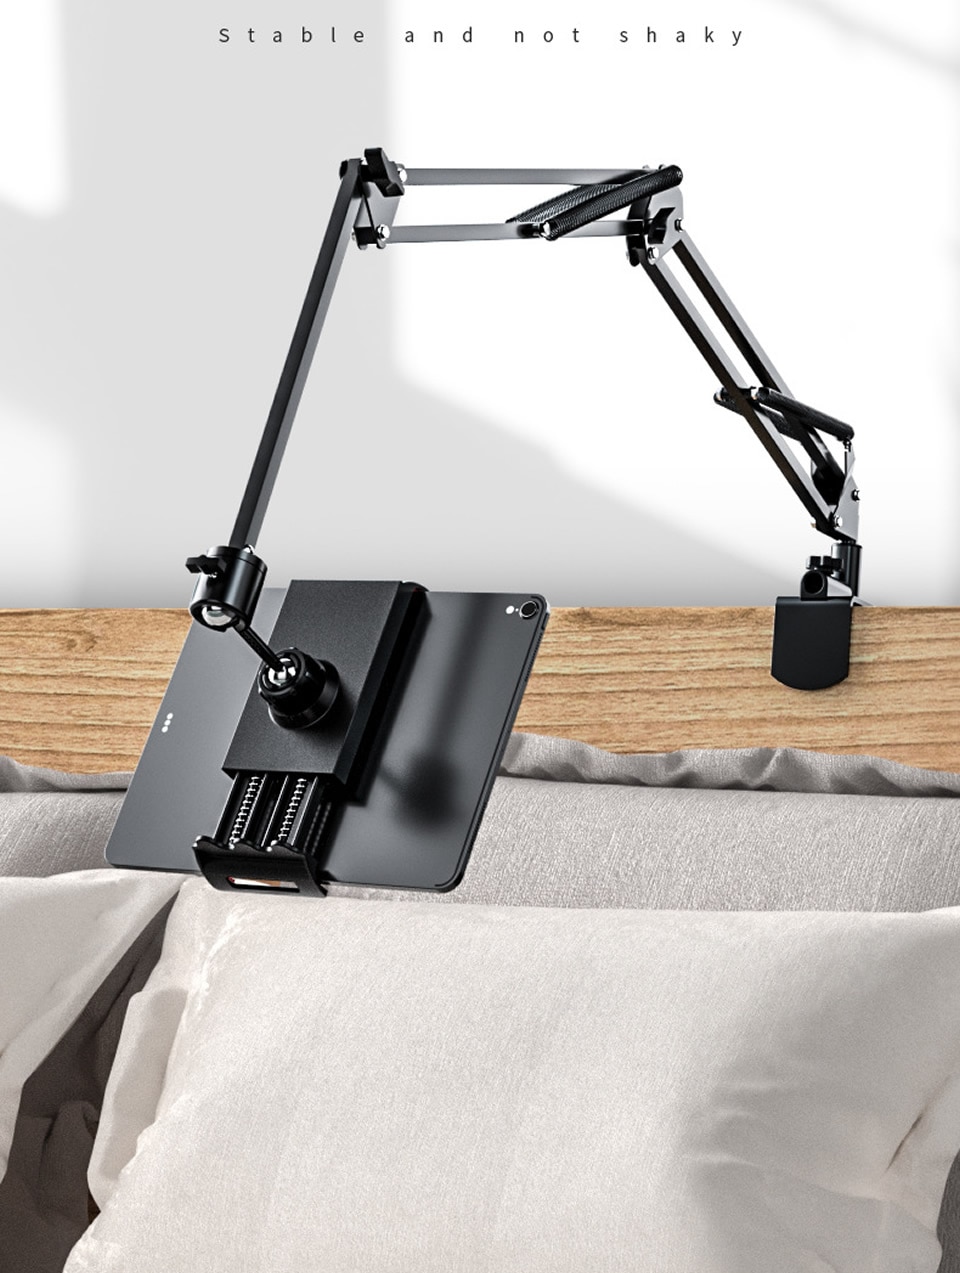 Long Arm 360 Degree Tablet Holder Stand for 4 to 11inch Tablet Smartphone Bed Desktop Lazy Holder Bracket Support for iPad